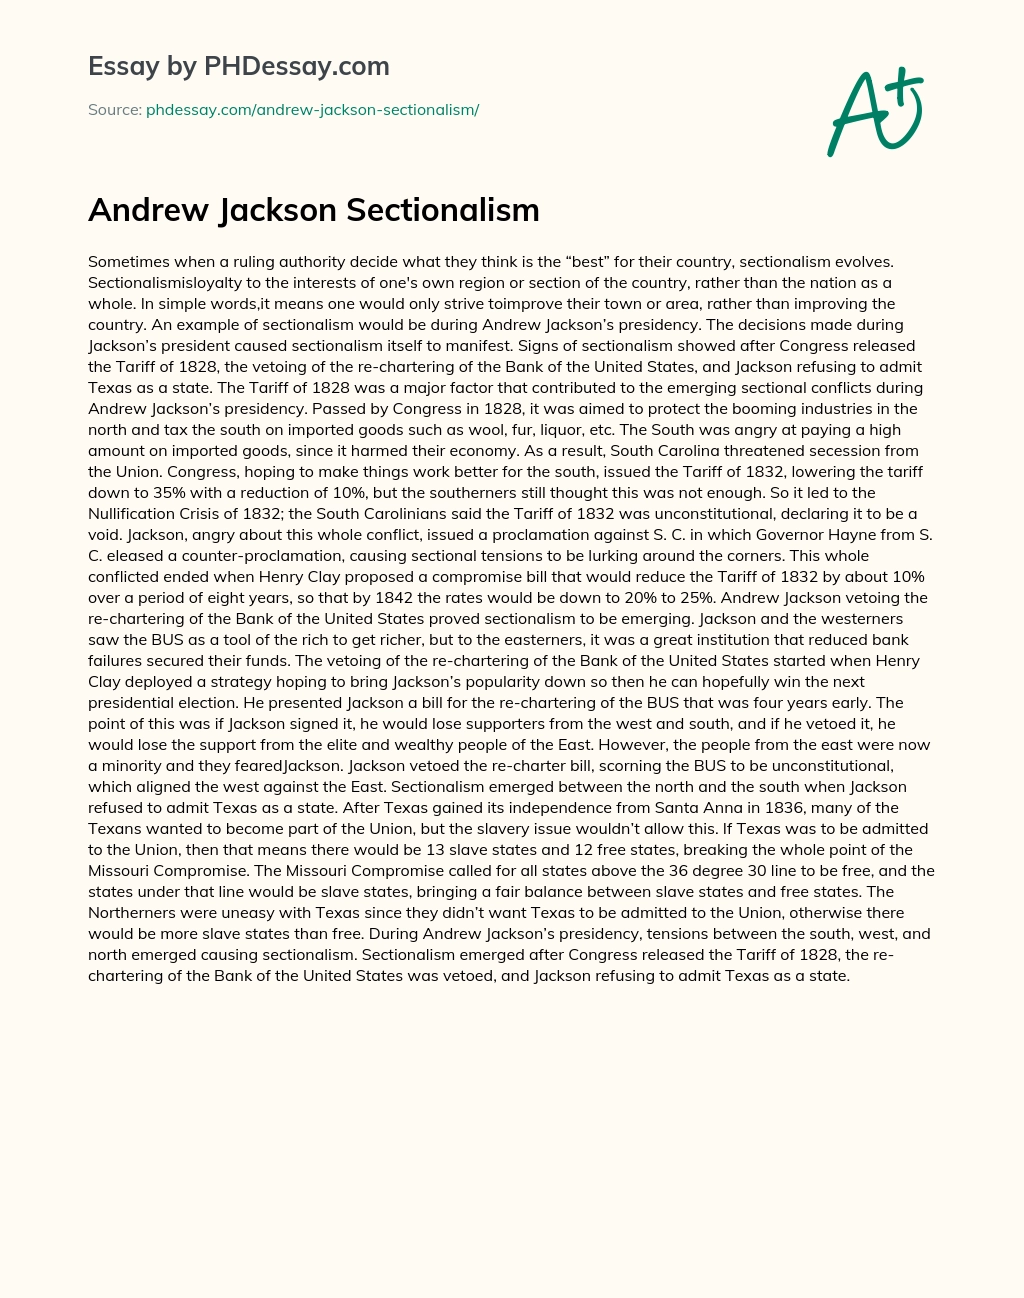 Andrew Jackson Sectionalism essay